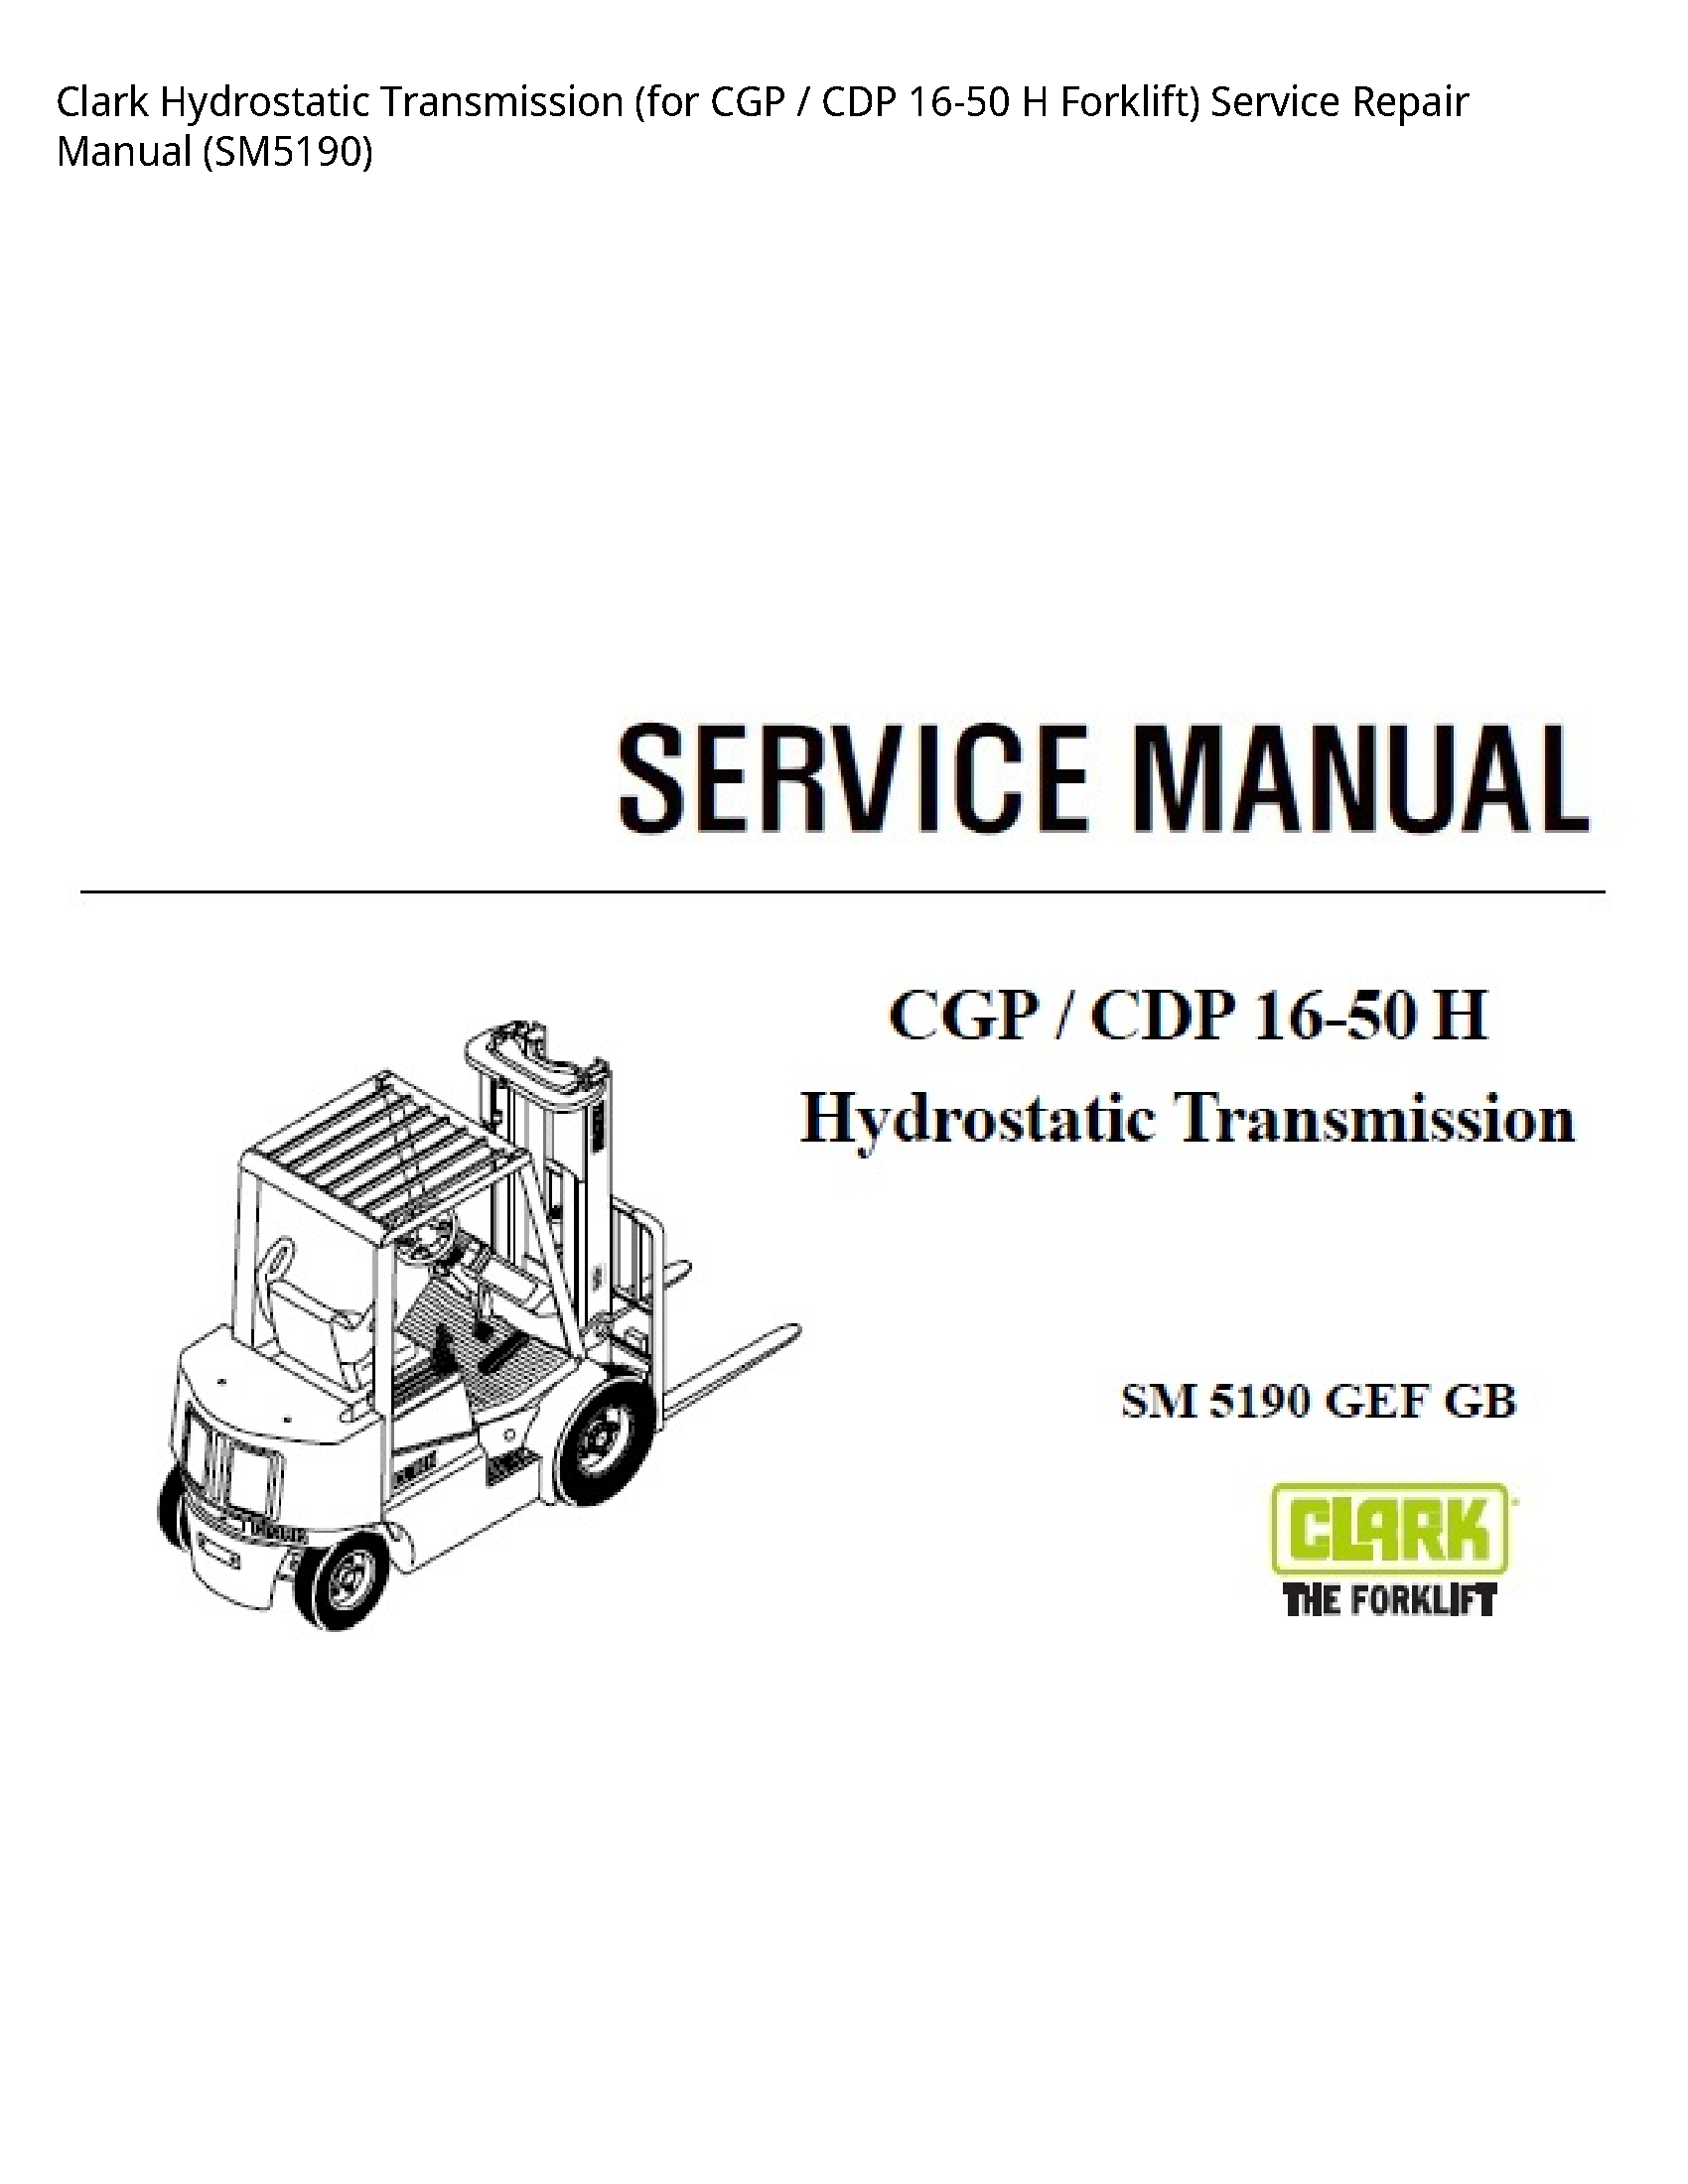 Clark 16-50 Hydrostatic Transmission (for CGP CDP Forklift) manual